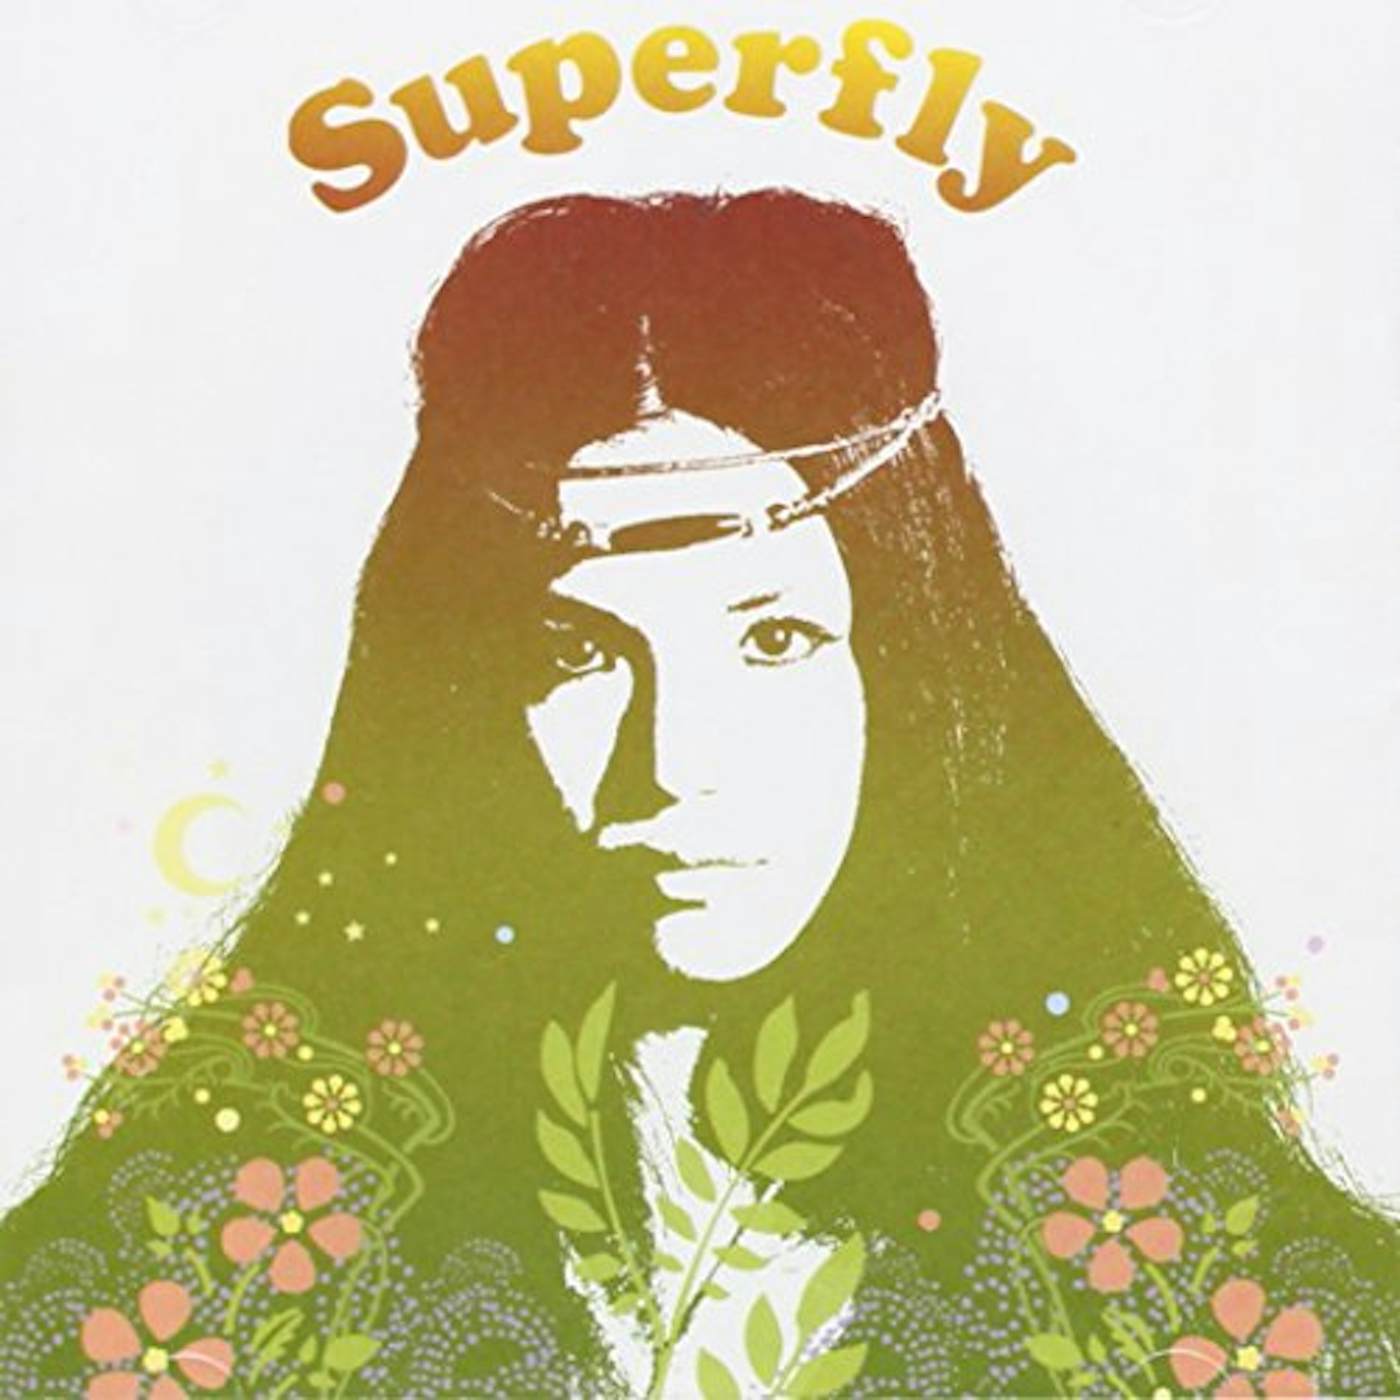 SUPERFLY CD